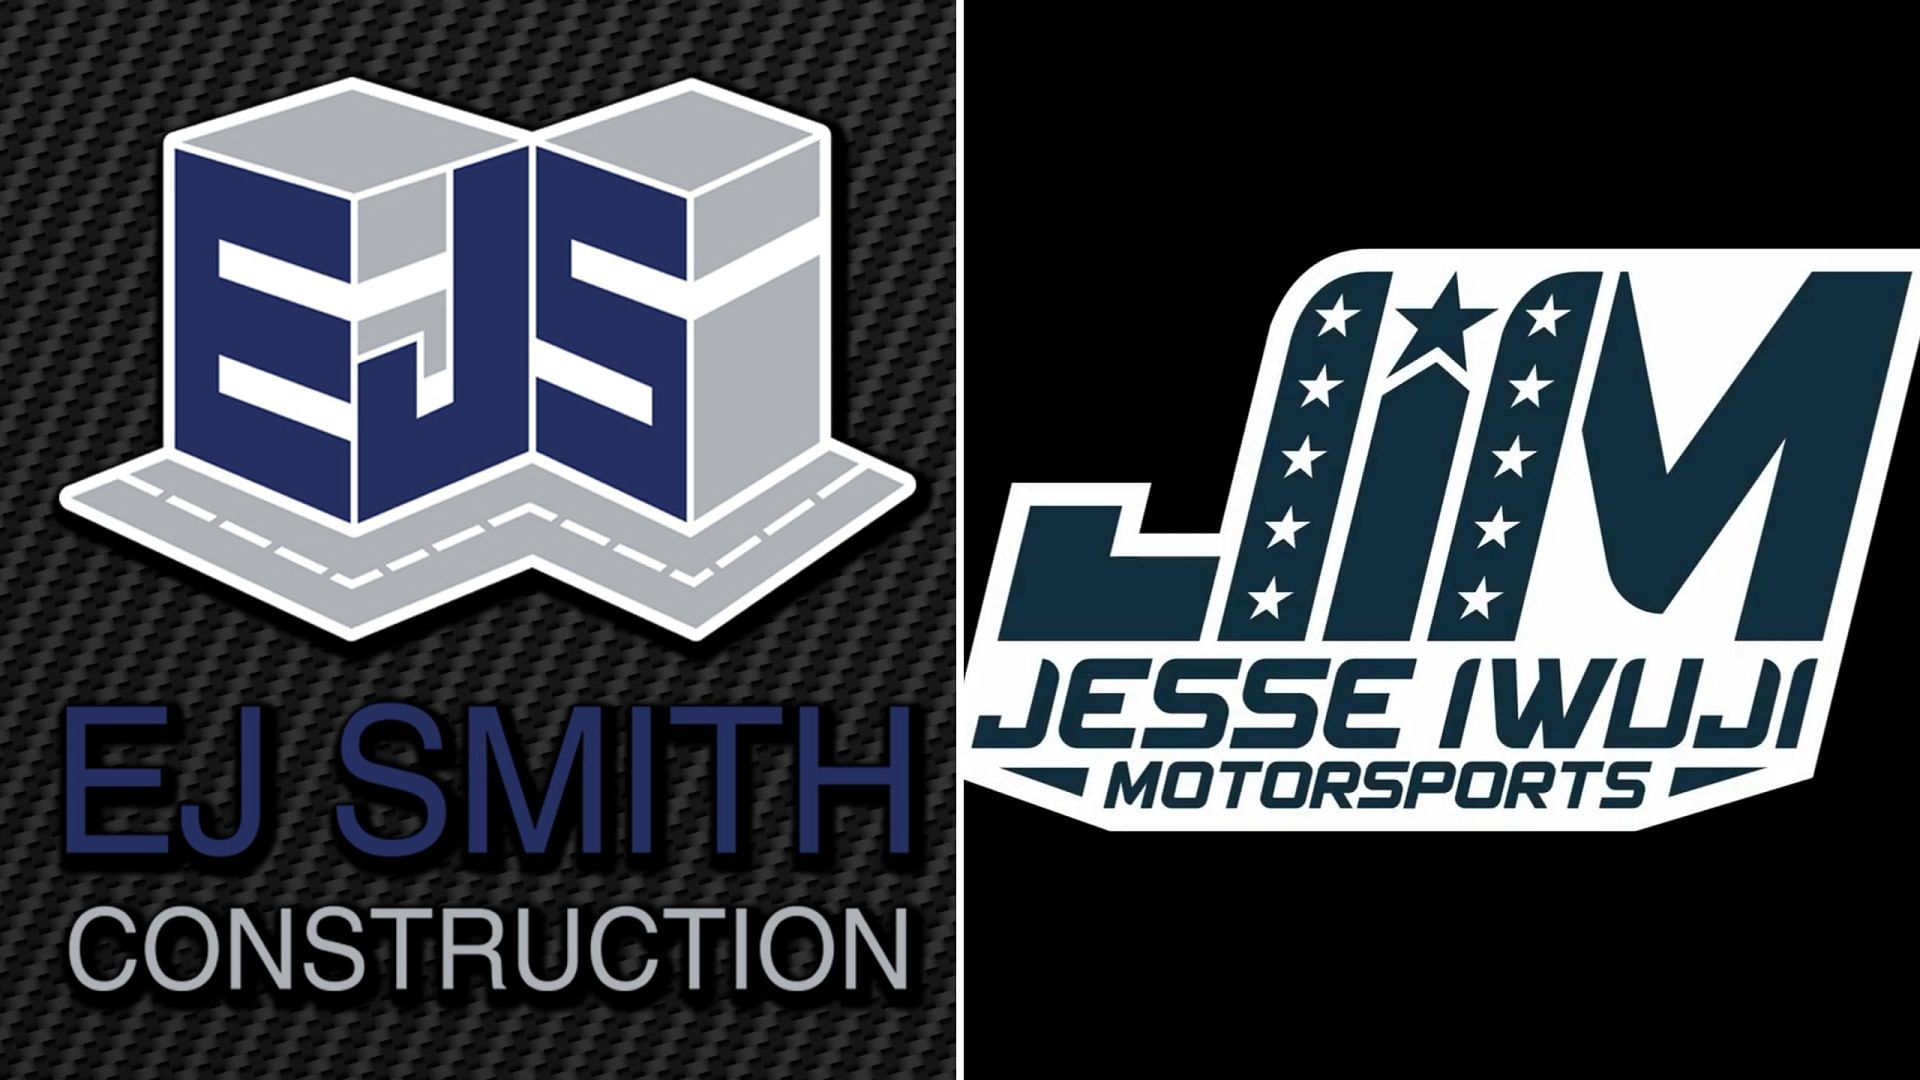 EJ Smith Construction and Jesse Iwuji Motorsports